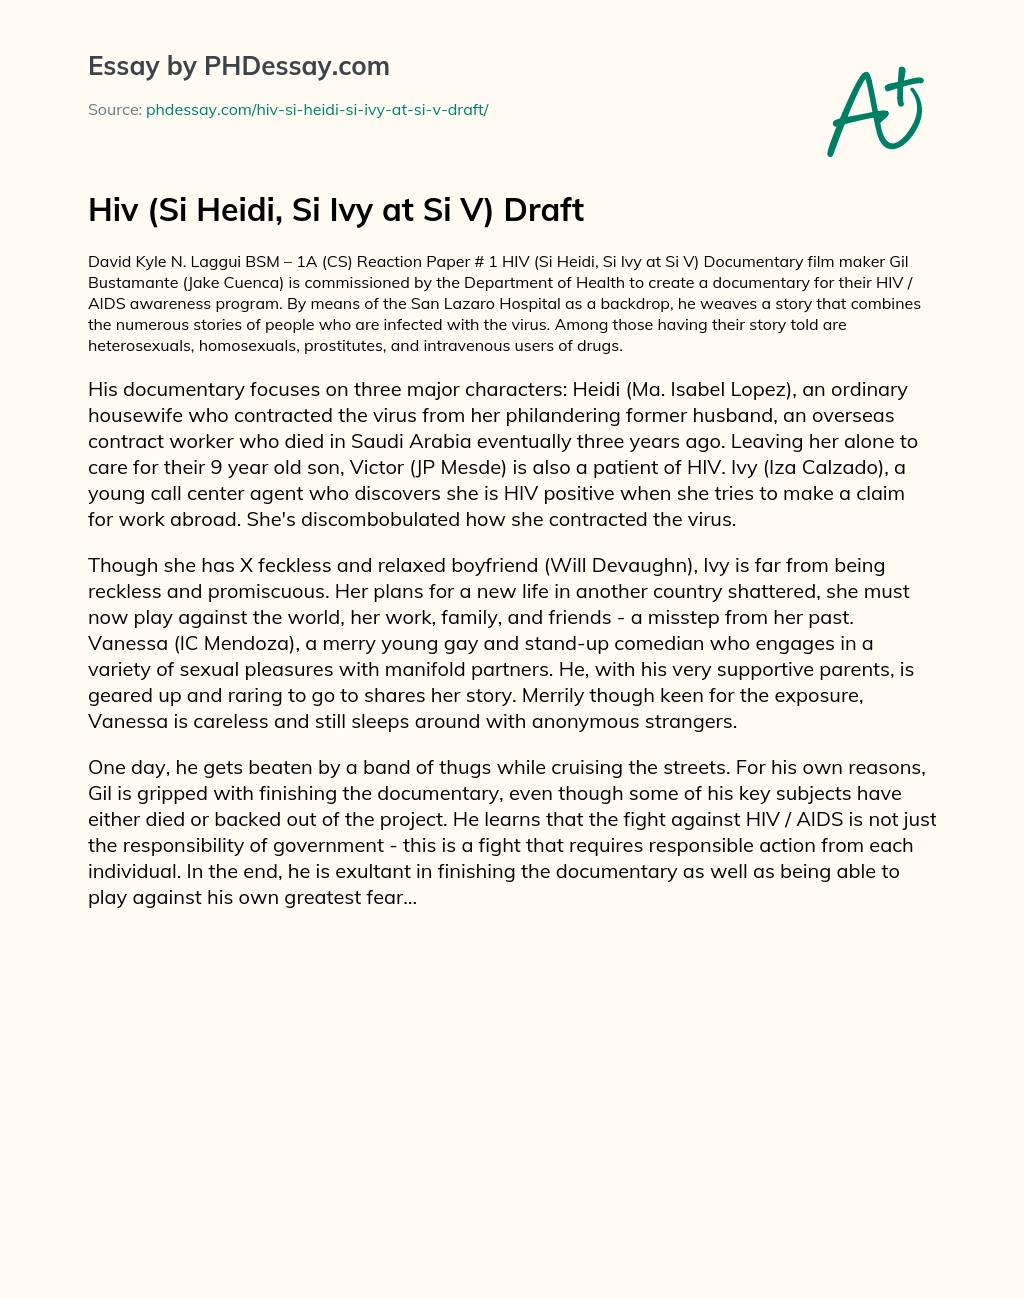 Hiv (Si Heidi, Si Ivy at Si V) Draft essay